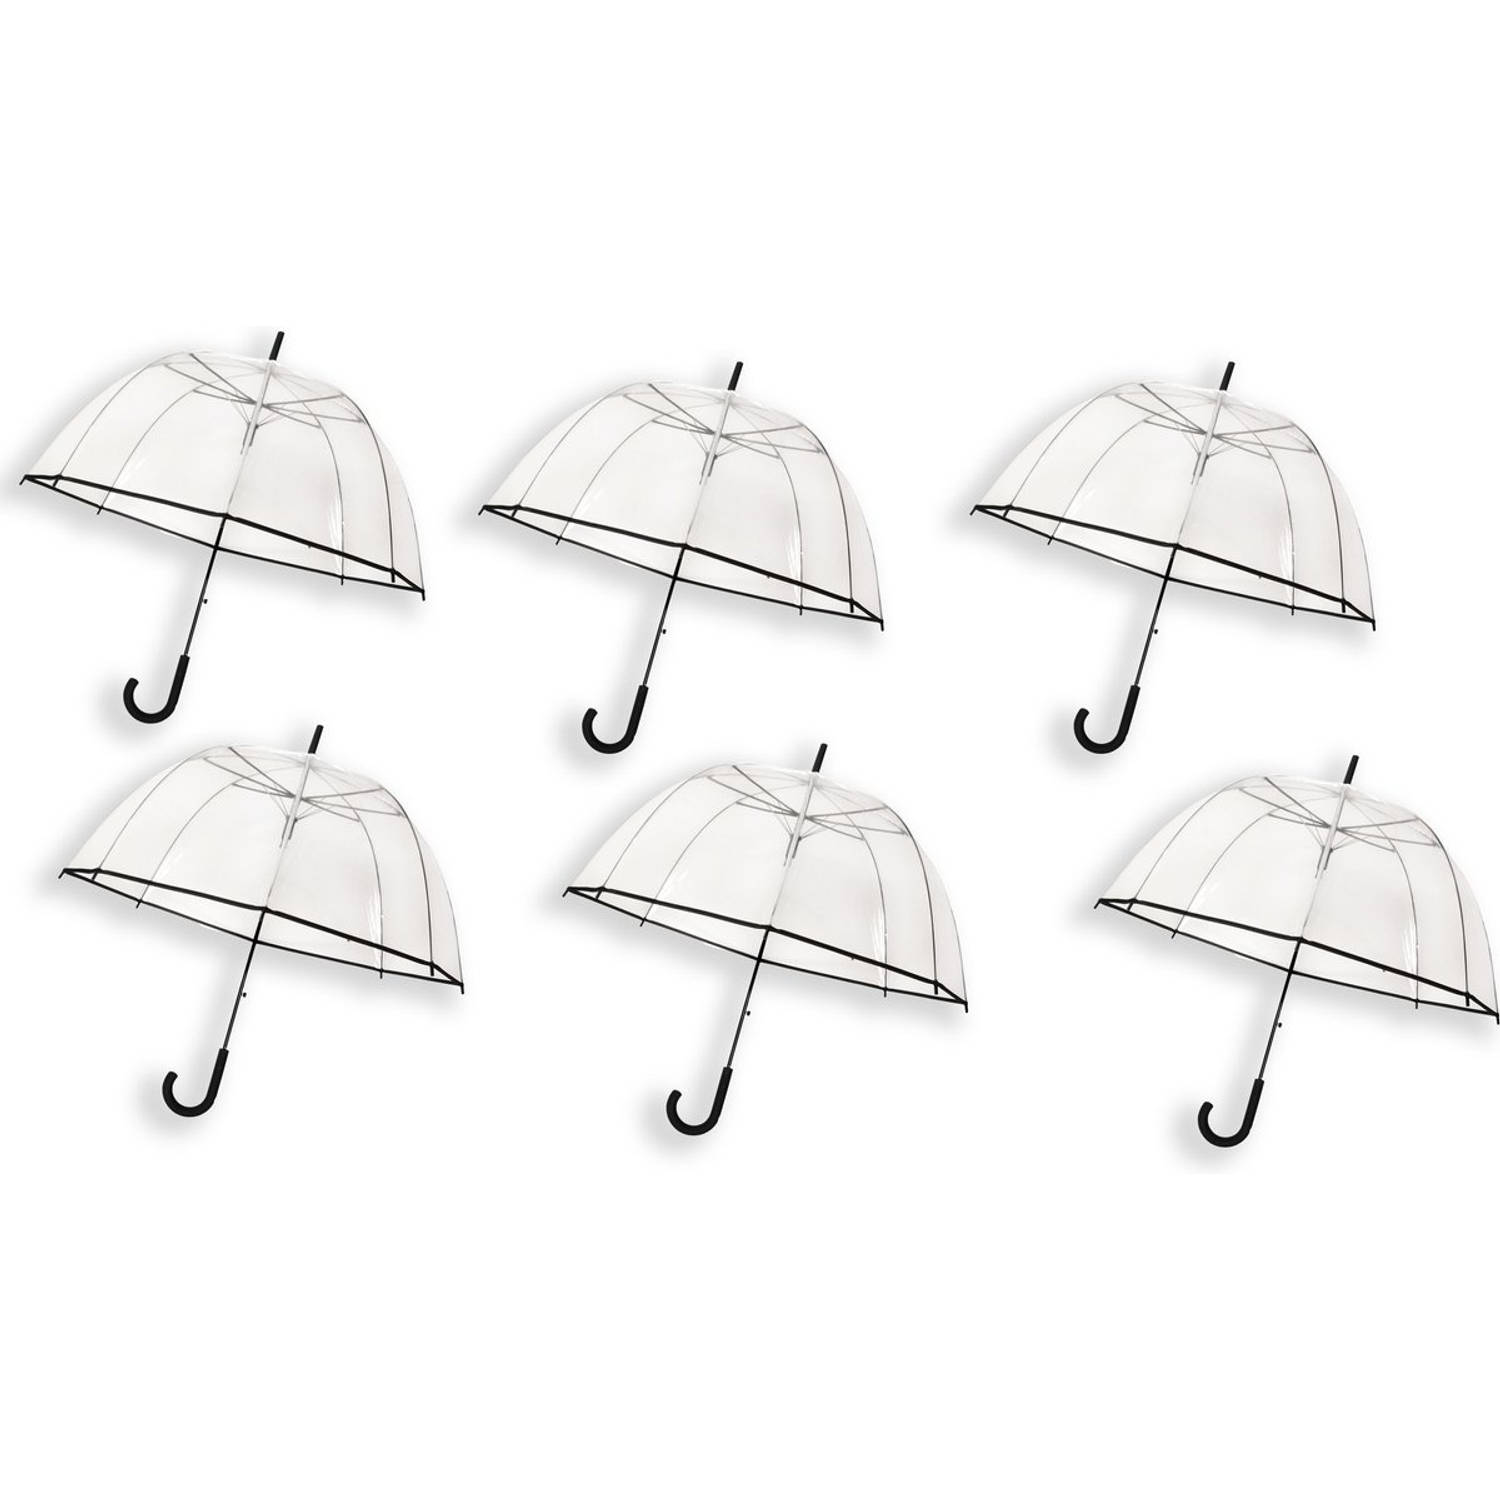 6 Stuks cm - paraplu - trouwparaplu - bruidsparaplu - stijlvol - plastic - | Blokker